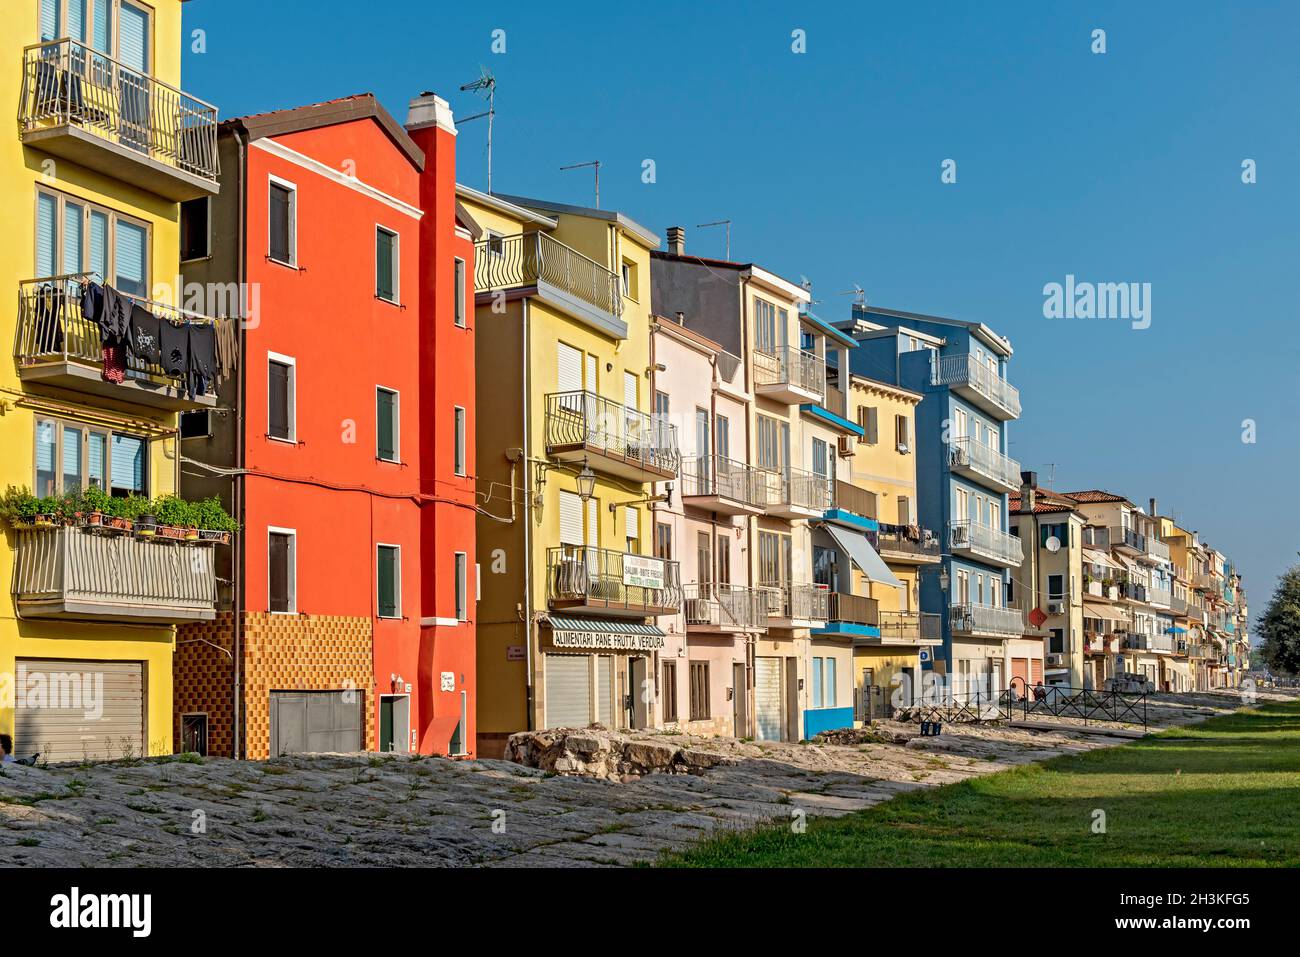 Sottomarina - Chioggia, Venice, Italy Stock Photo